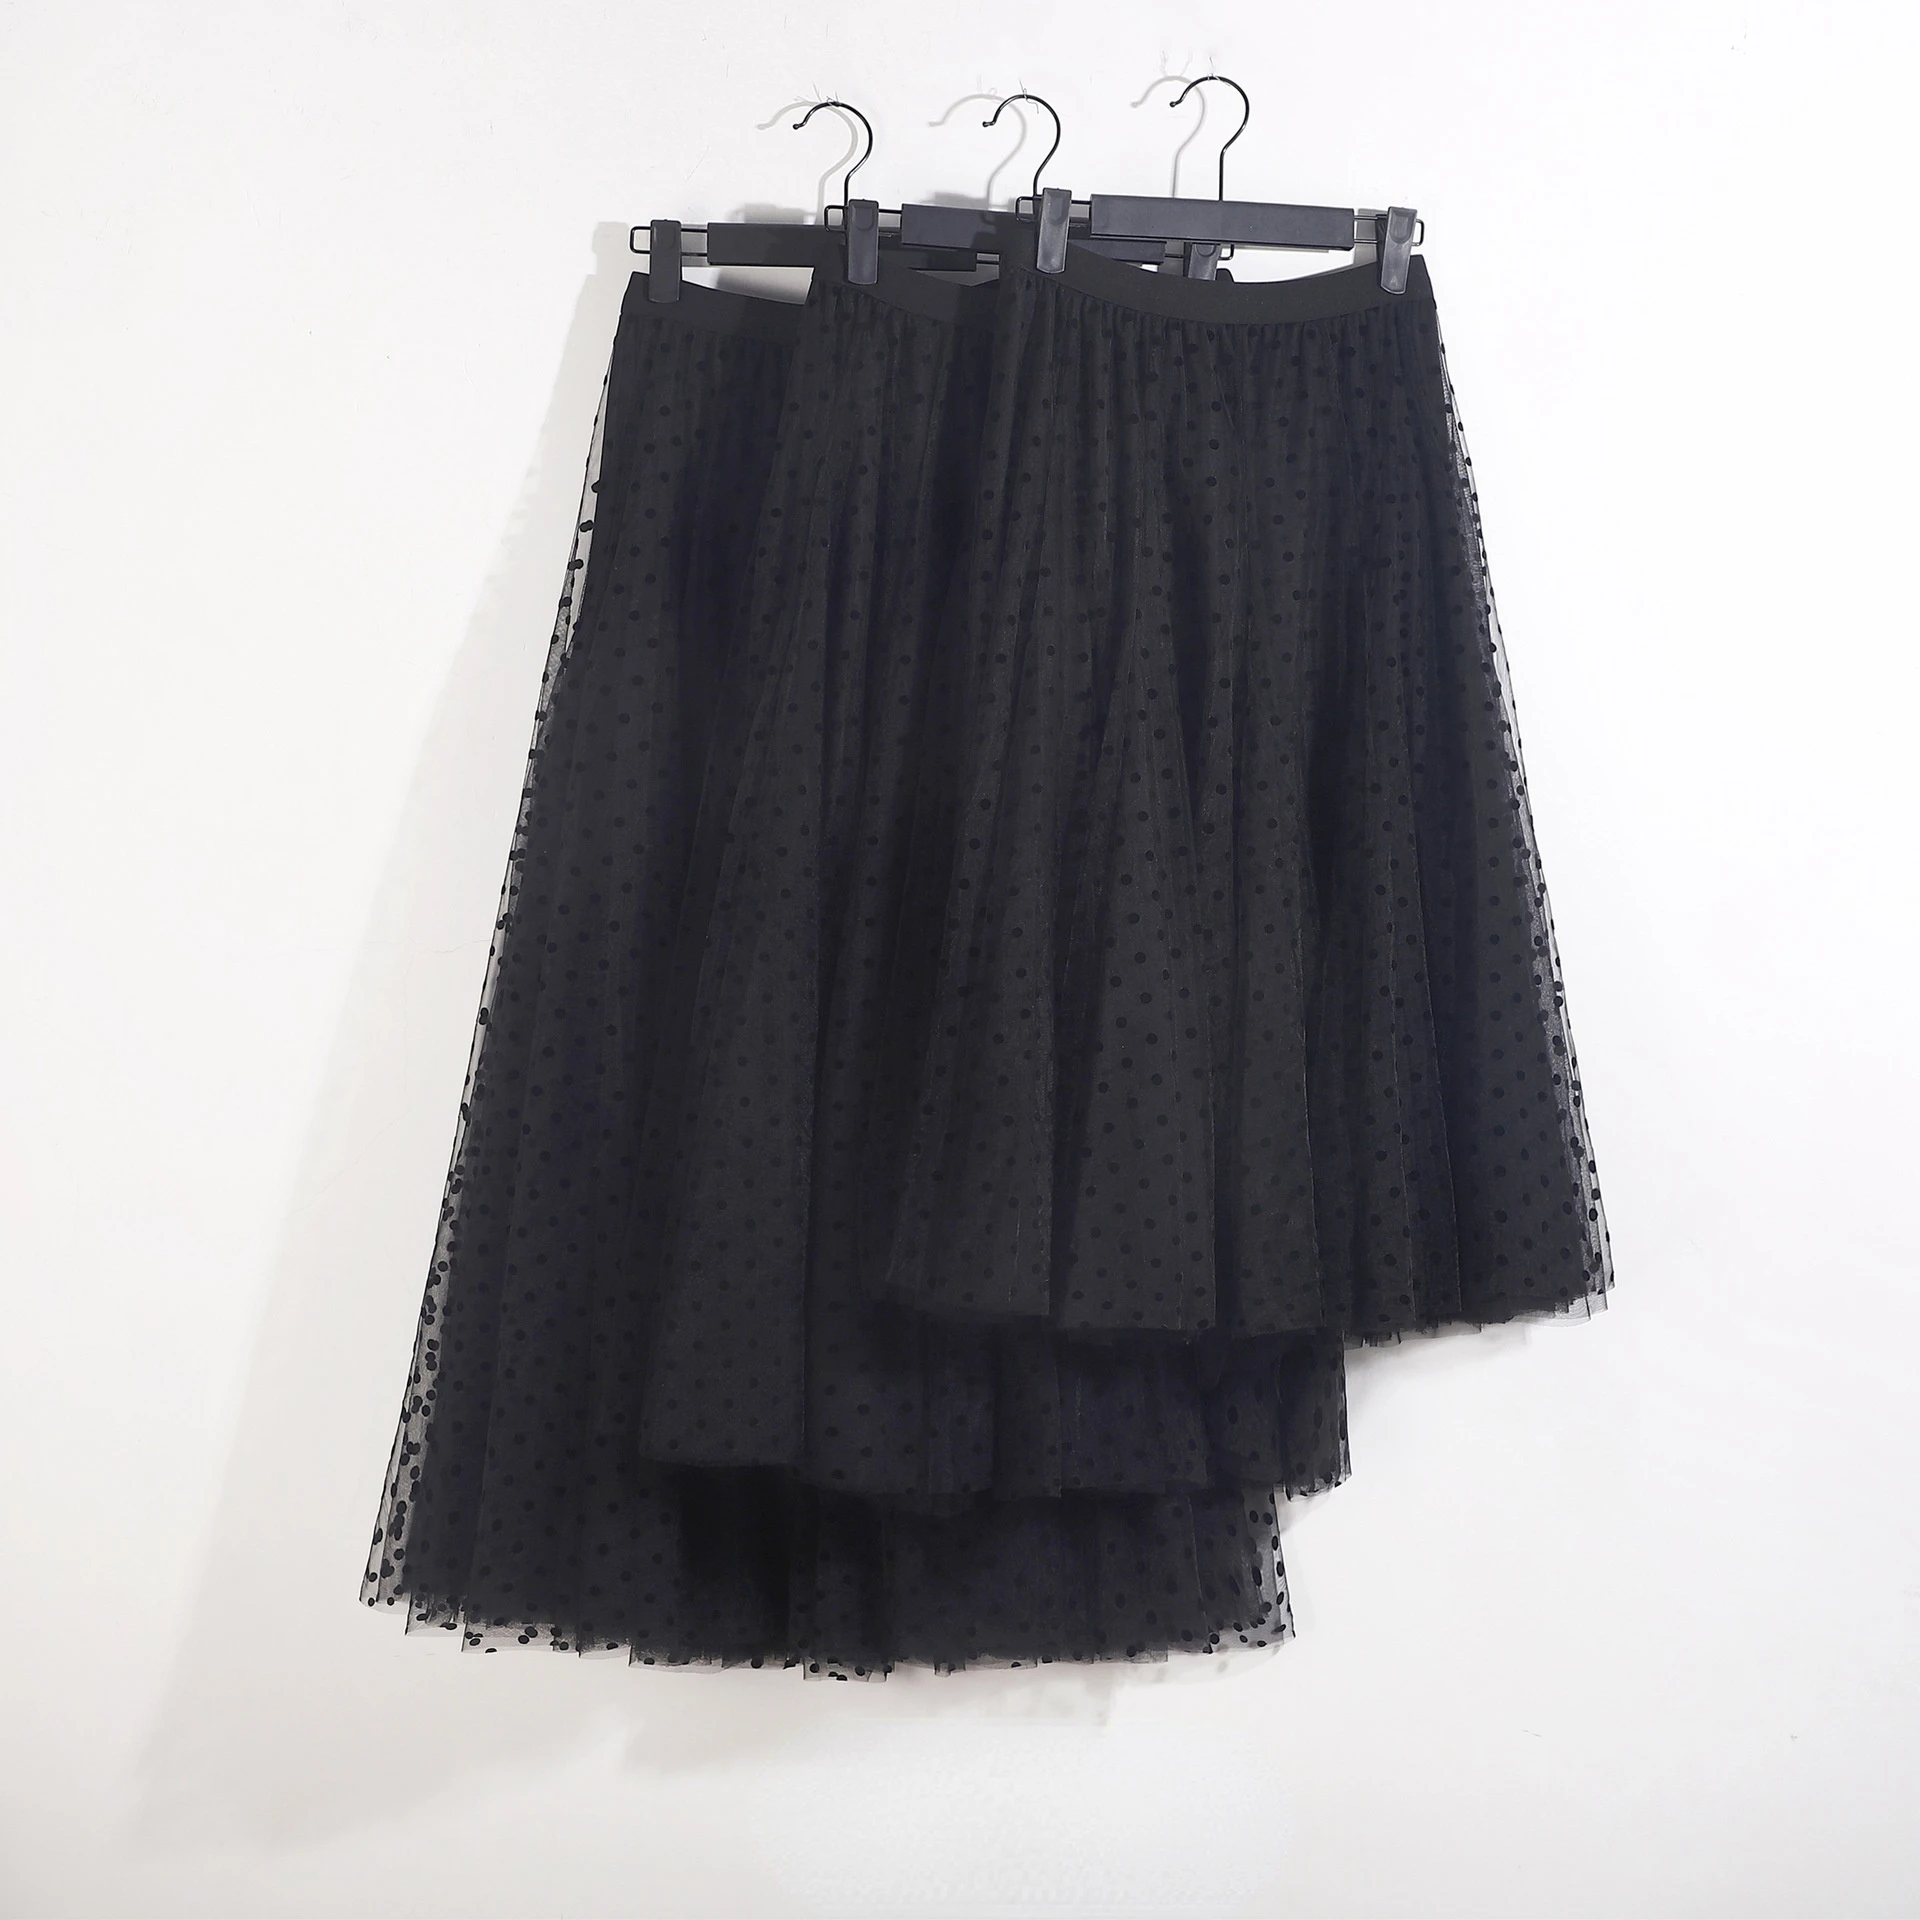 Spring Autumn 72/82/92cm Polka Dot Tulle Skirts Women 2022 New Casual Elastic High Waist A-line Skirt Female Party Beach Skirt jean skirt